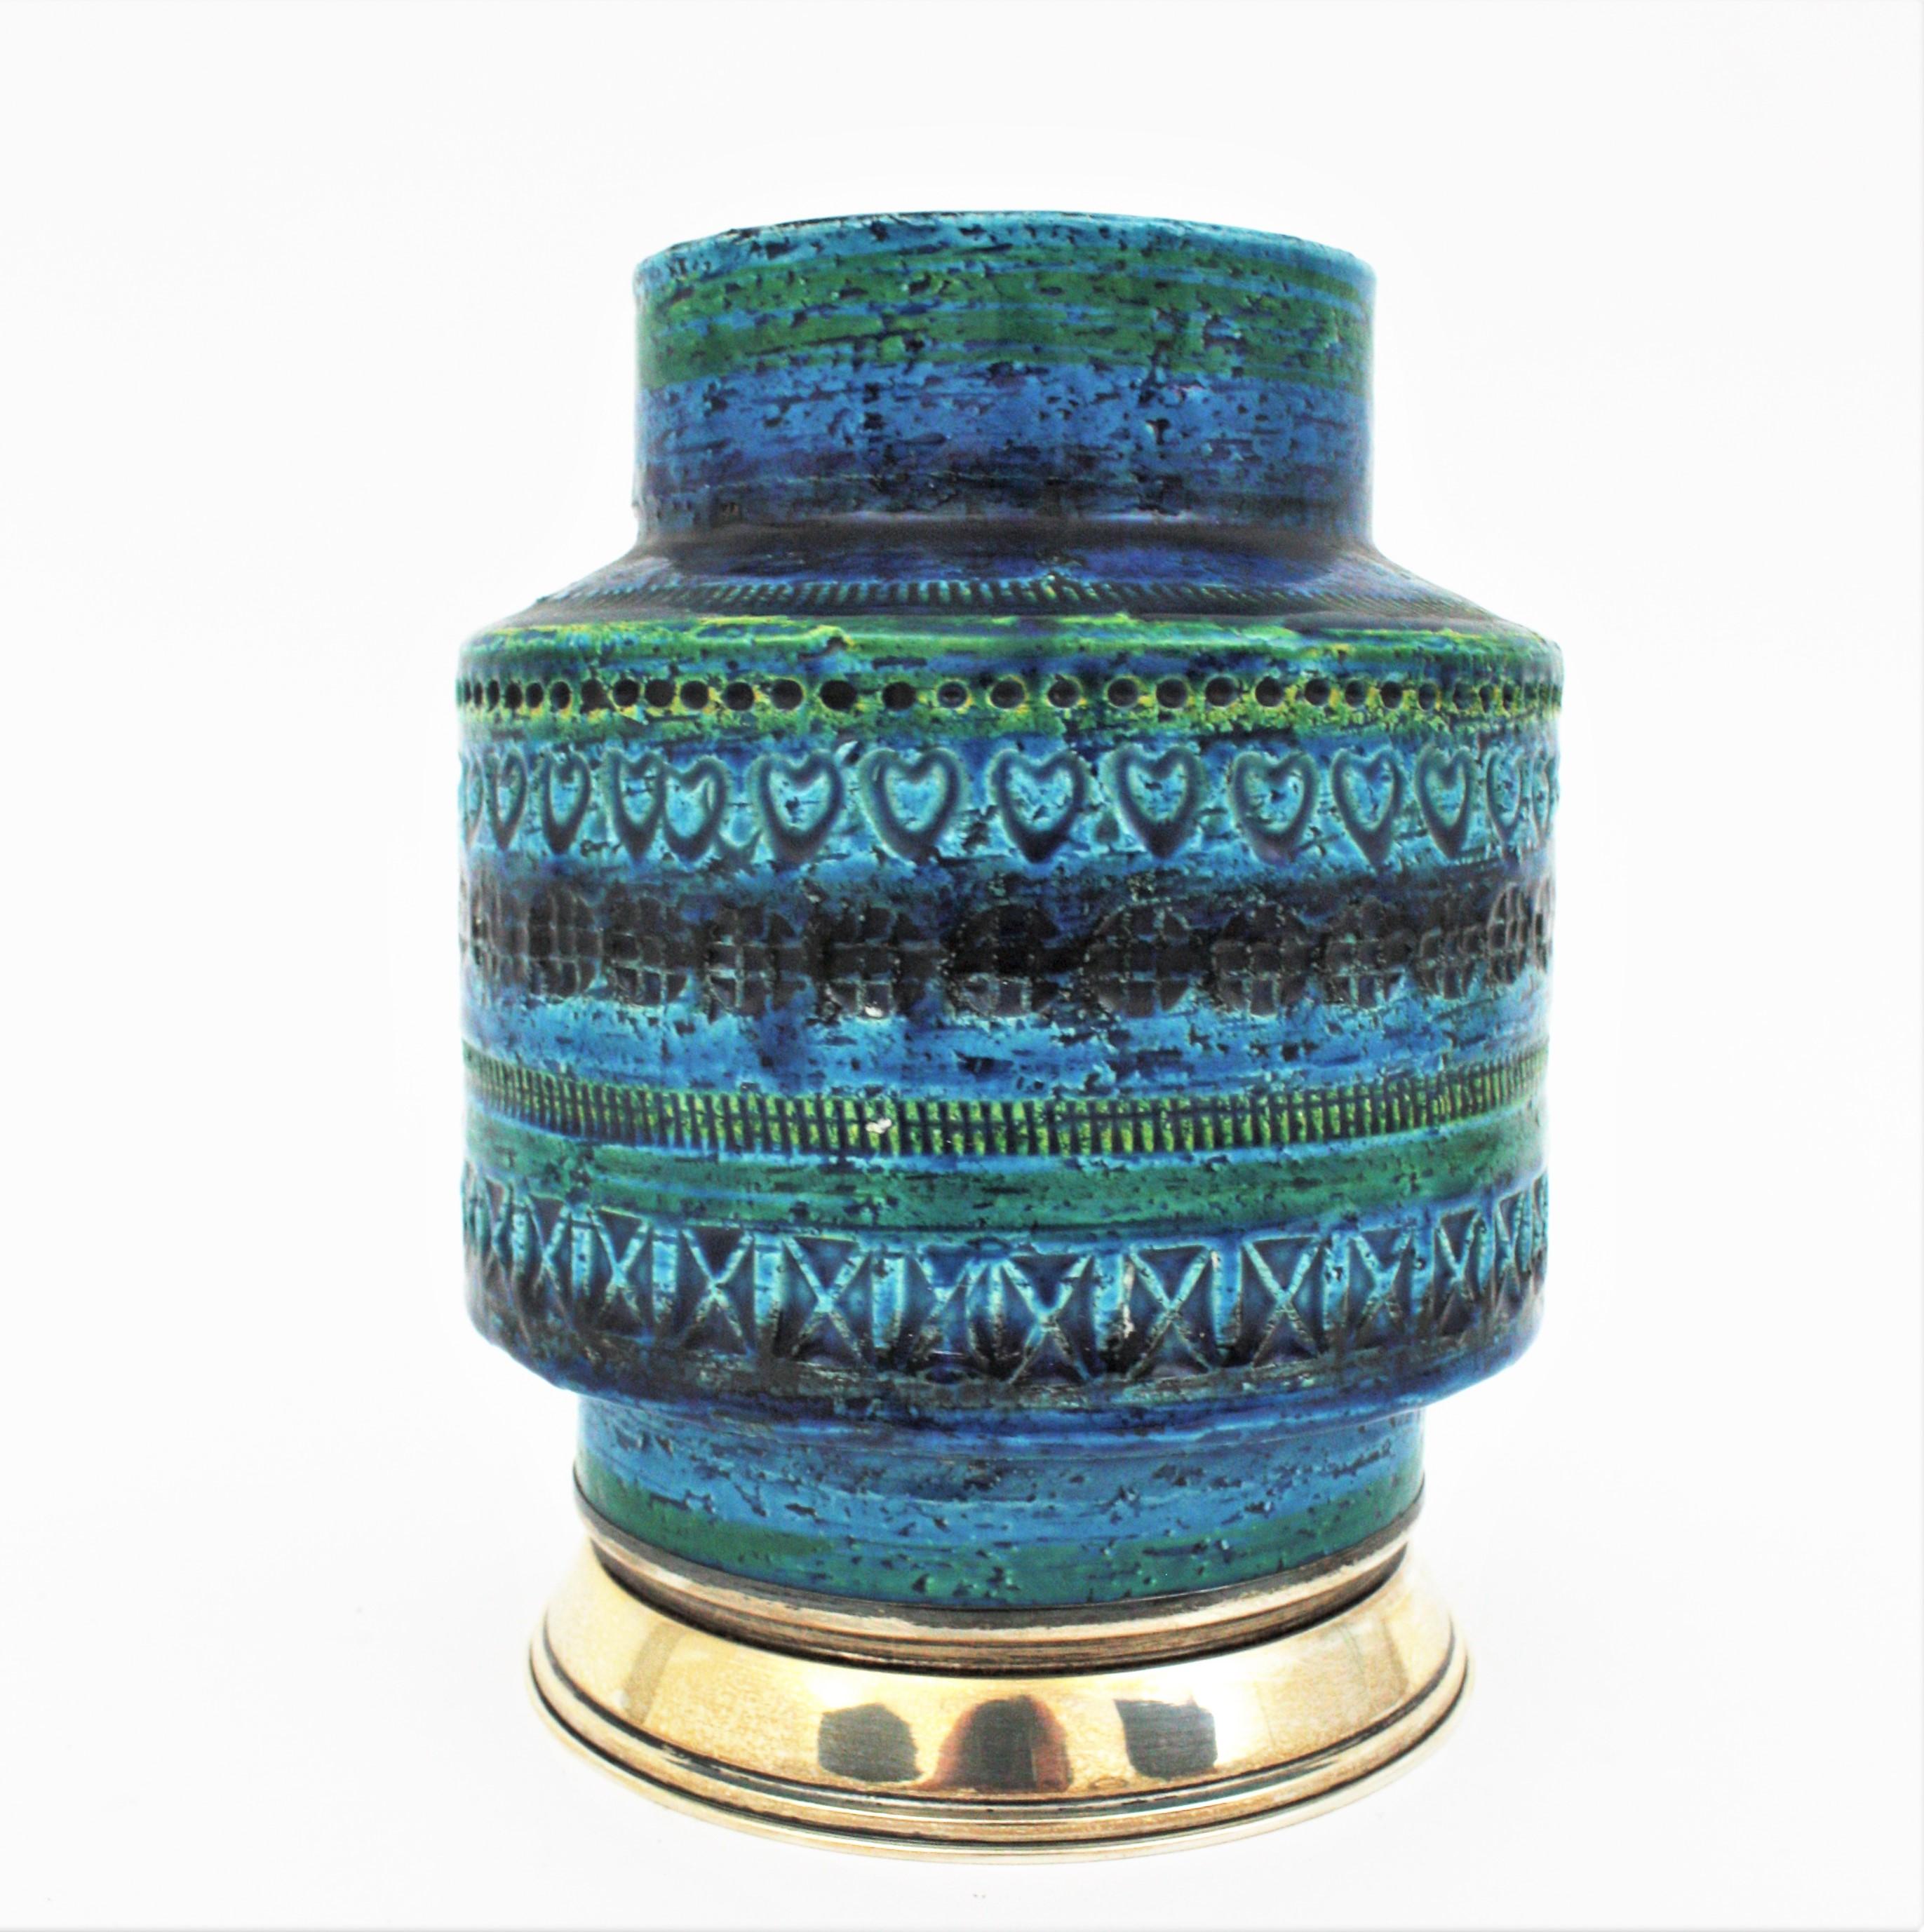 Hand-Crafted Bitossi Aldo Londi Rimini Blue Ceramic Vase on Sterling Silver Base, 1960s For Sale